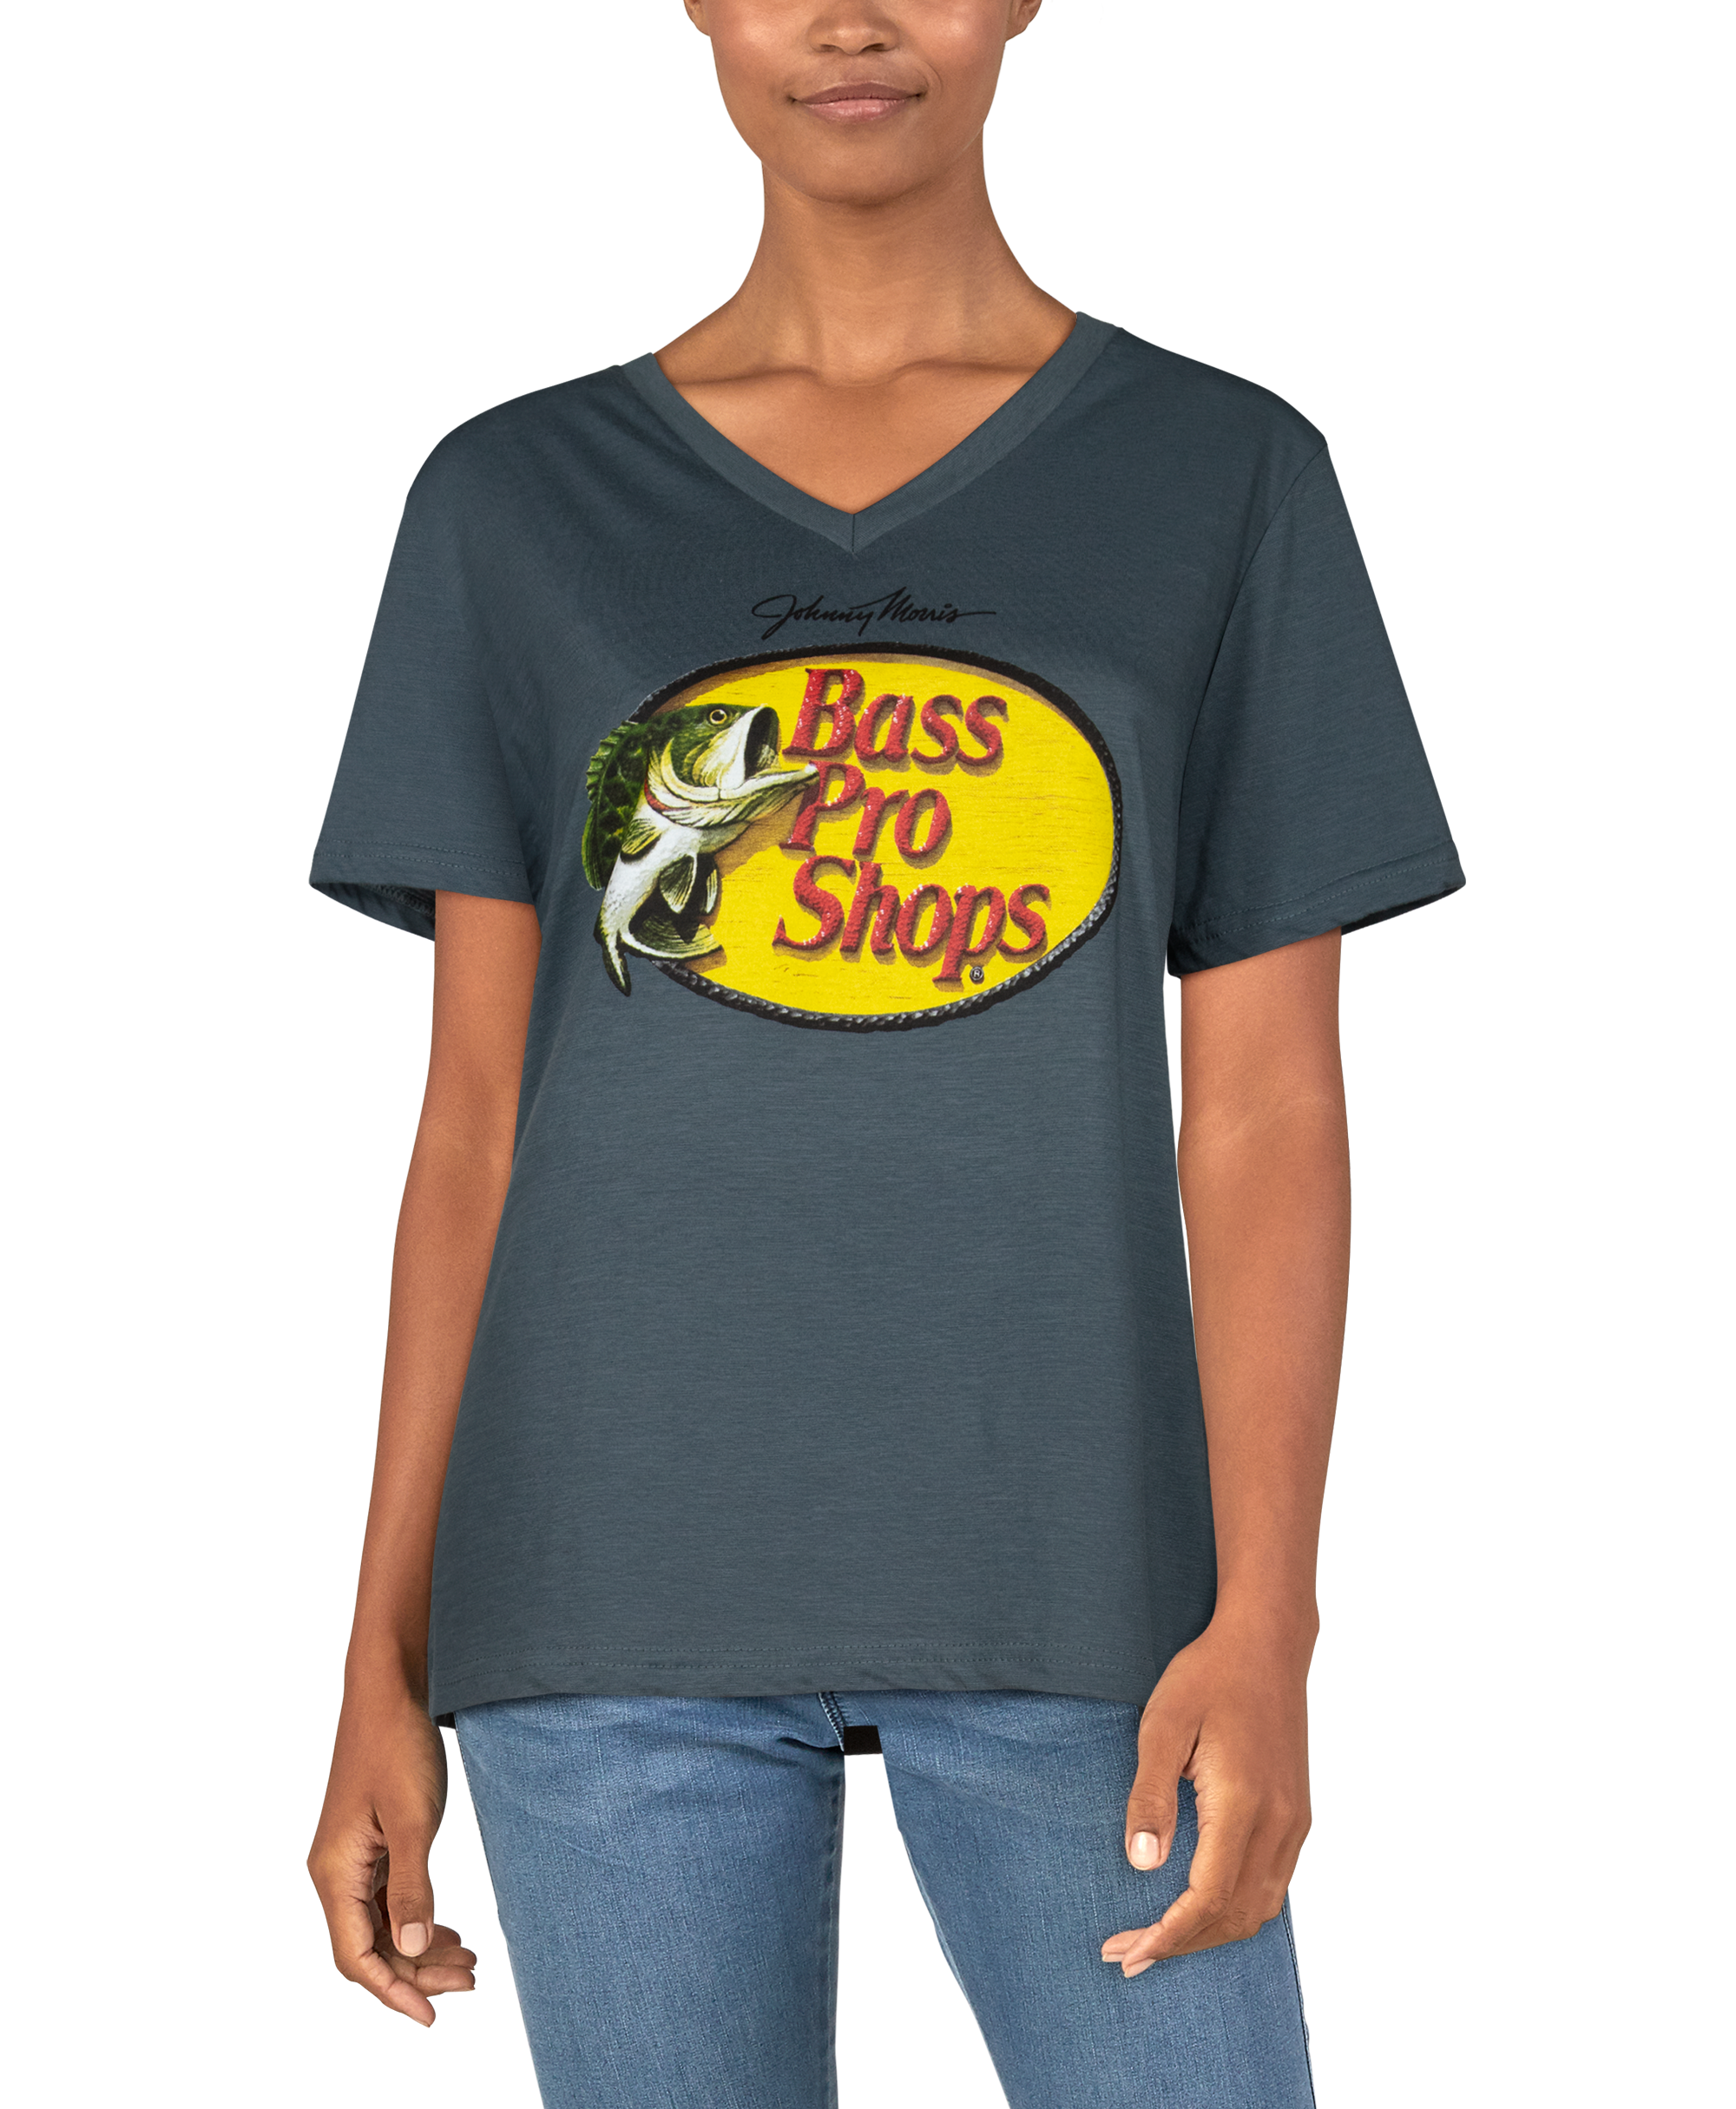 Bass Pro Shops Woodcut Logo V-Neck Short-Sleeve T-Shirt for Ladies - Charcoal - XL